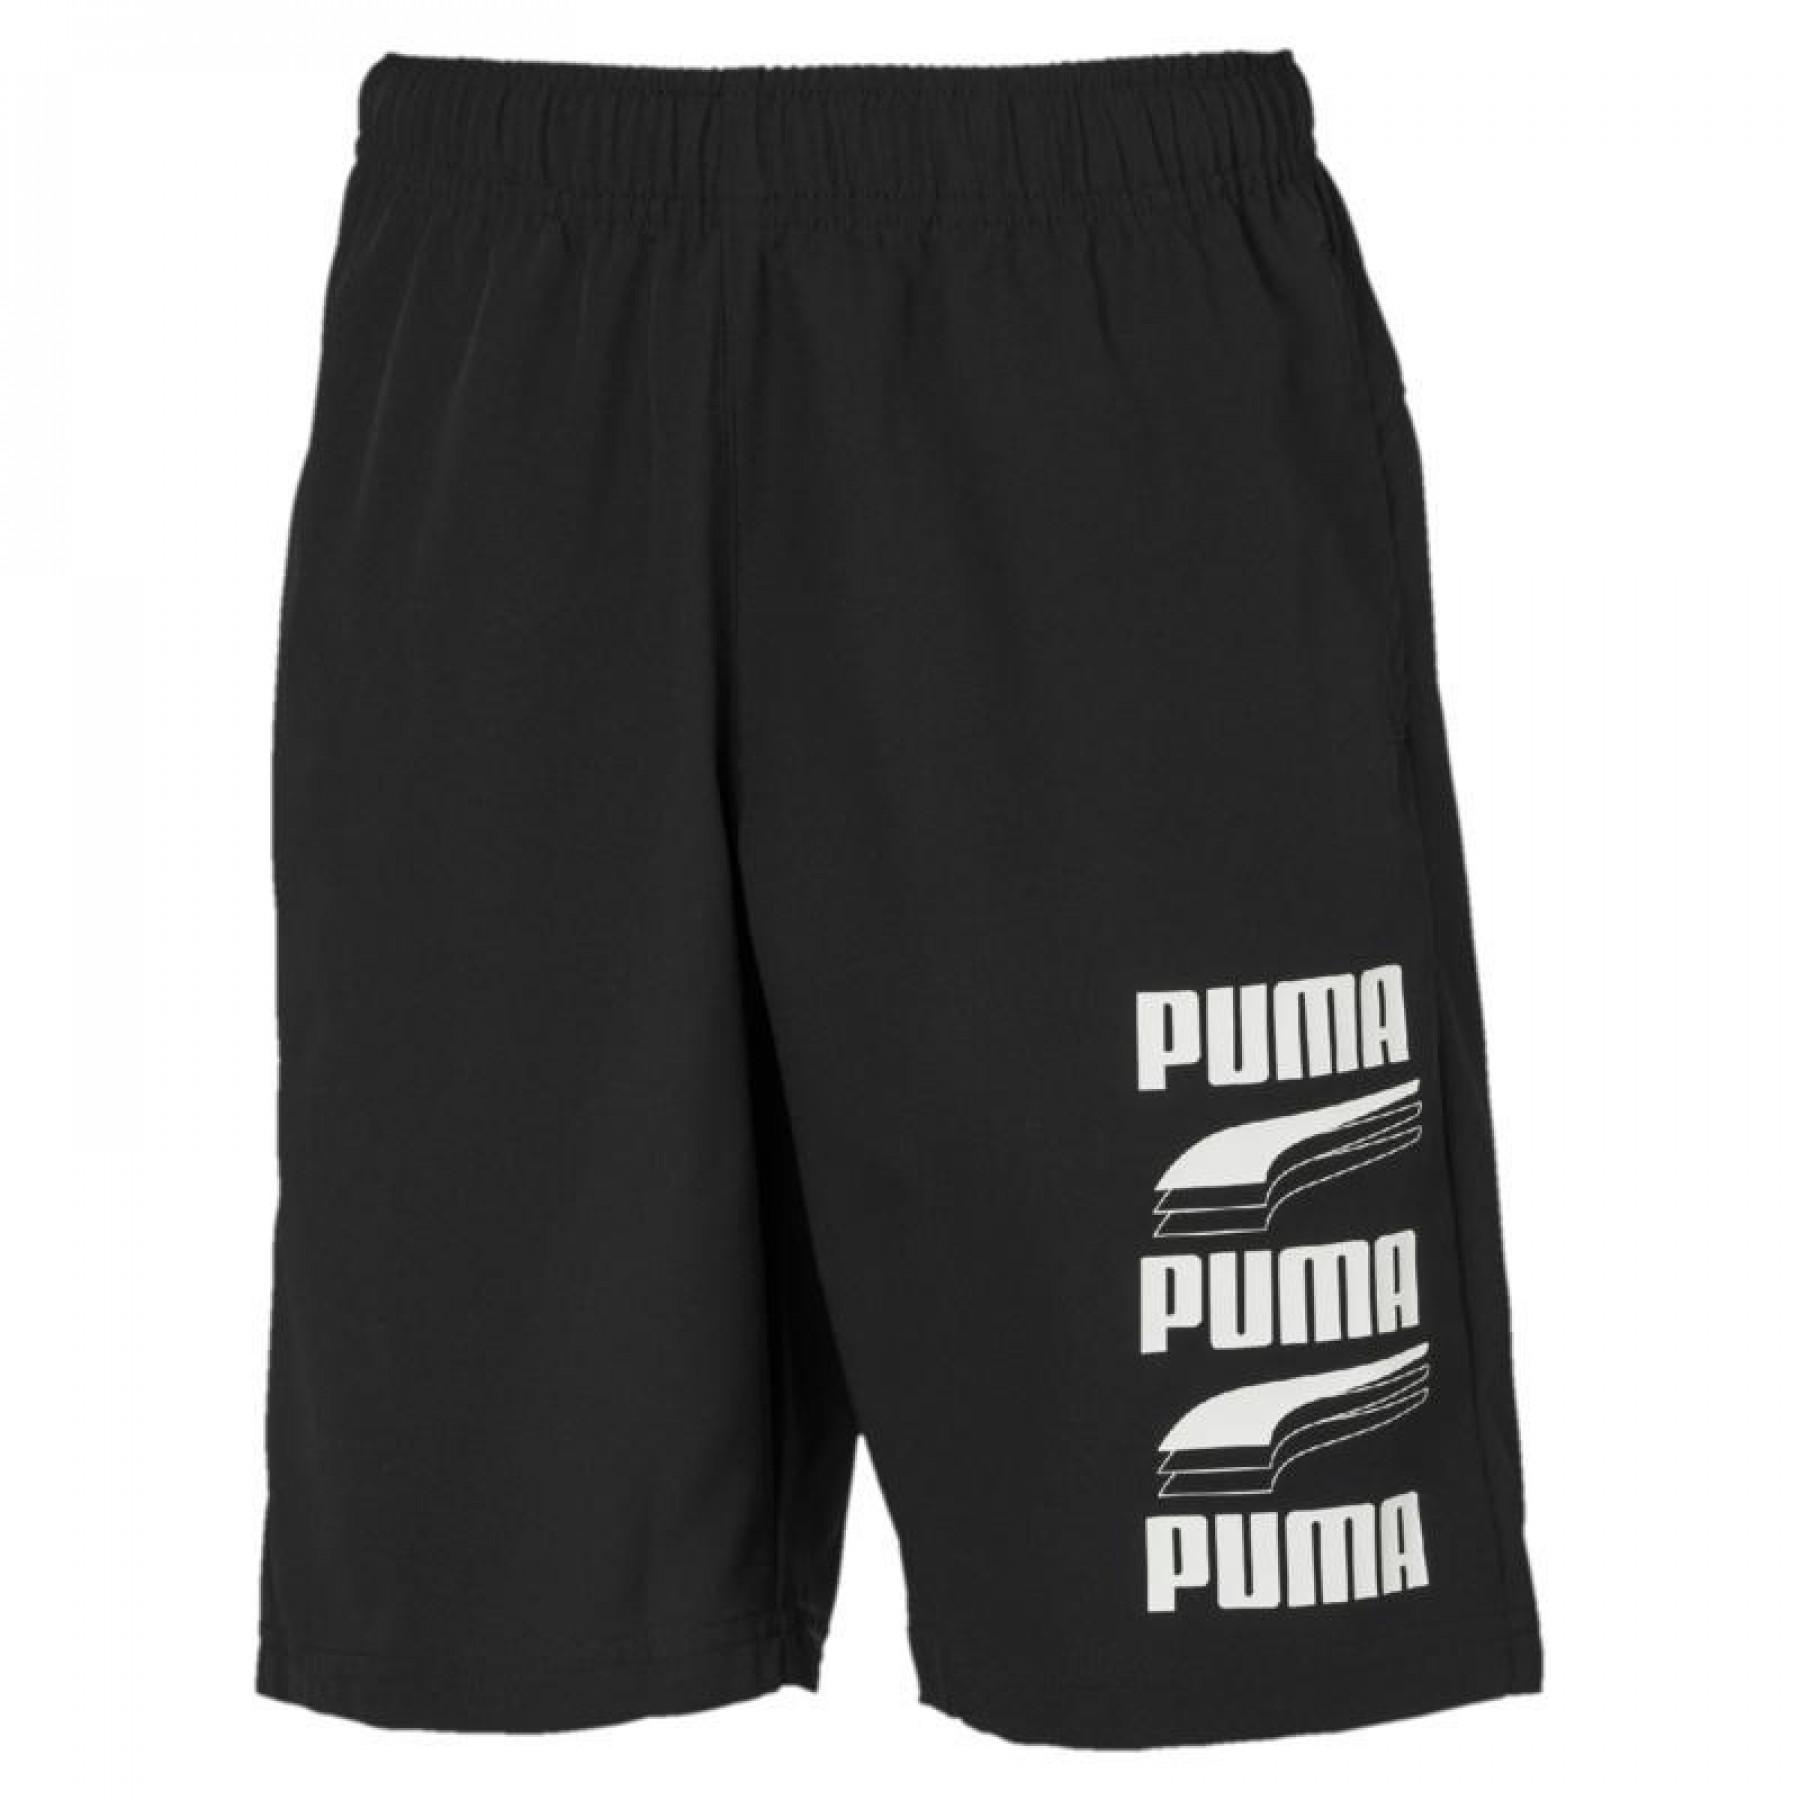 Pantalón corto para niños Puma rbl bold wvn